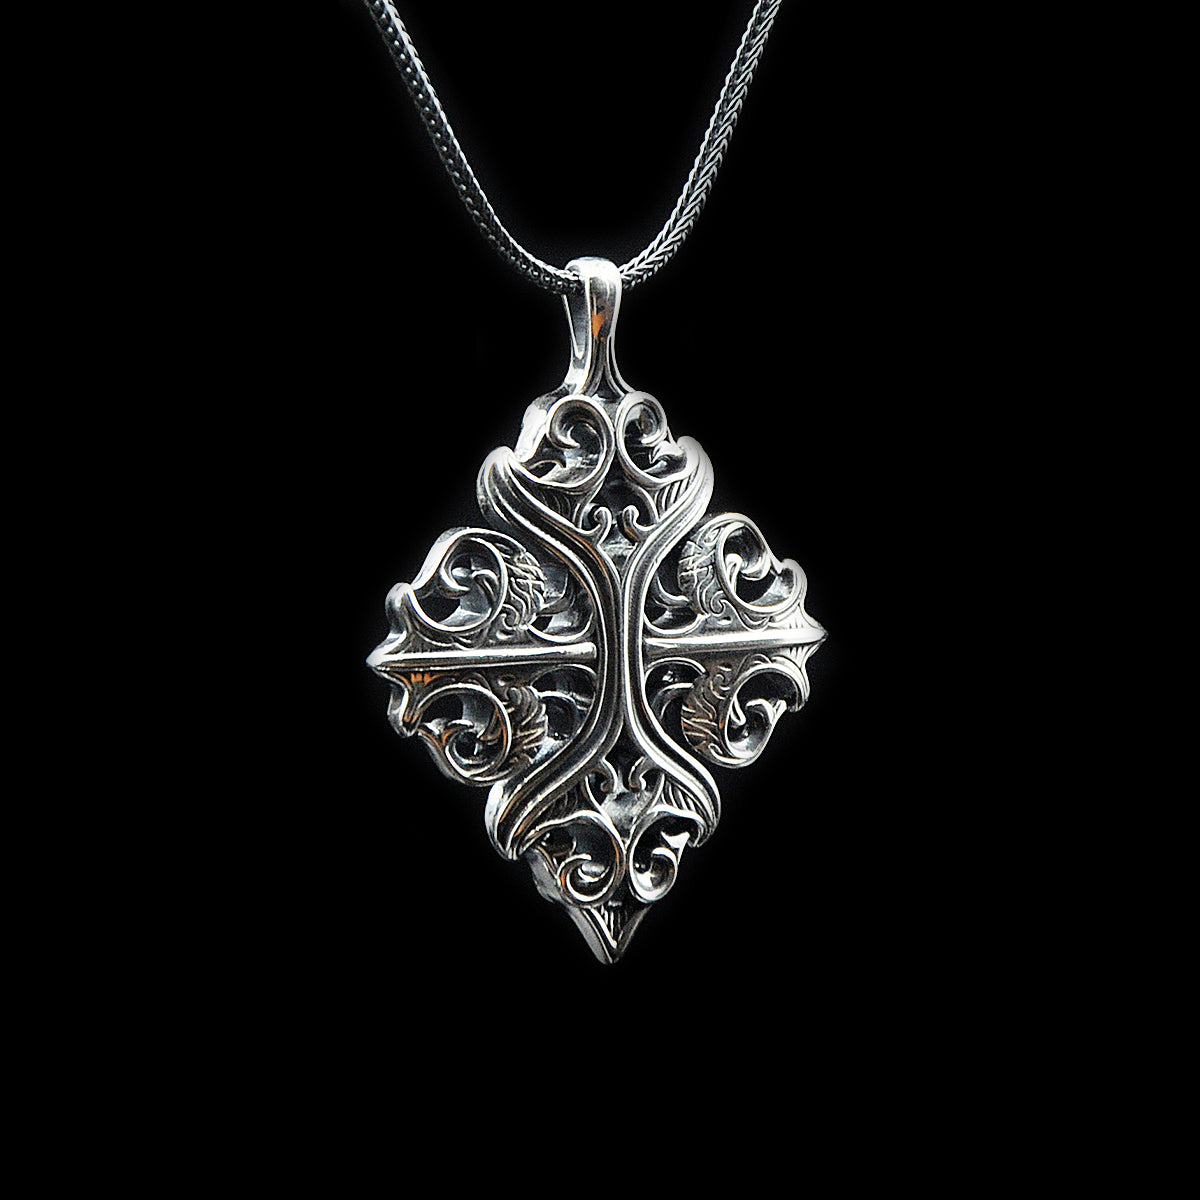 DYQ Jewelry Kabala Men's Necklace Pendant 925 Silver Men's jewelry brand